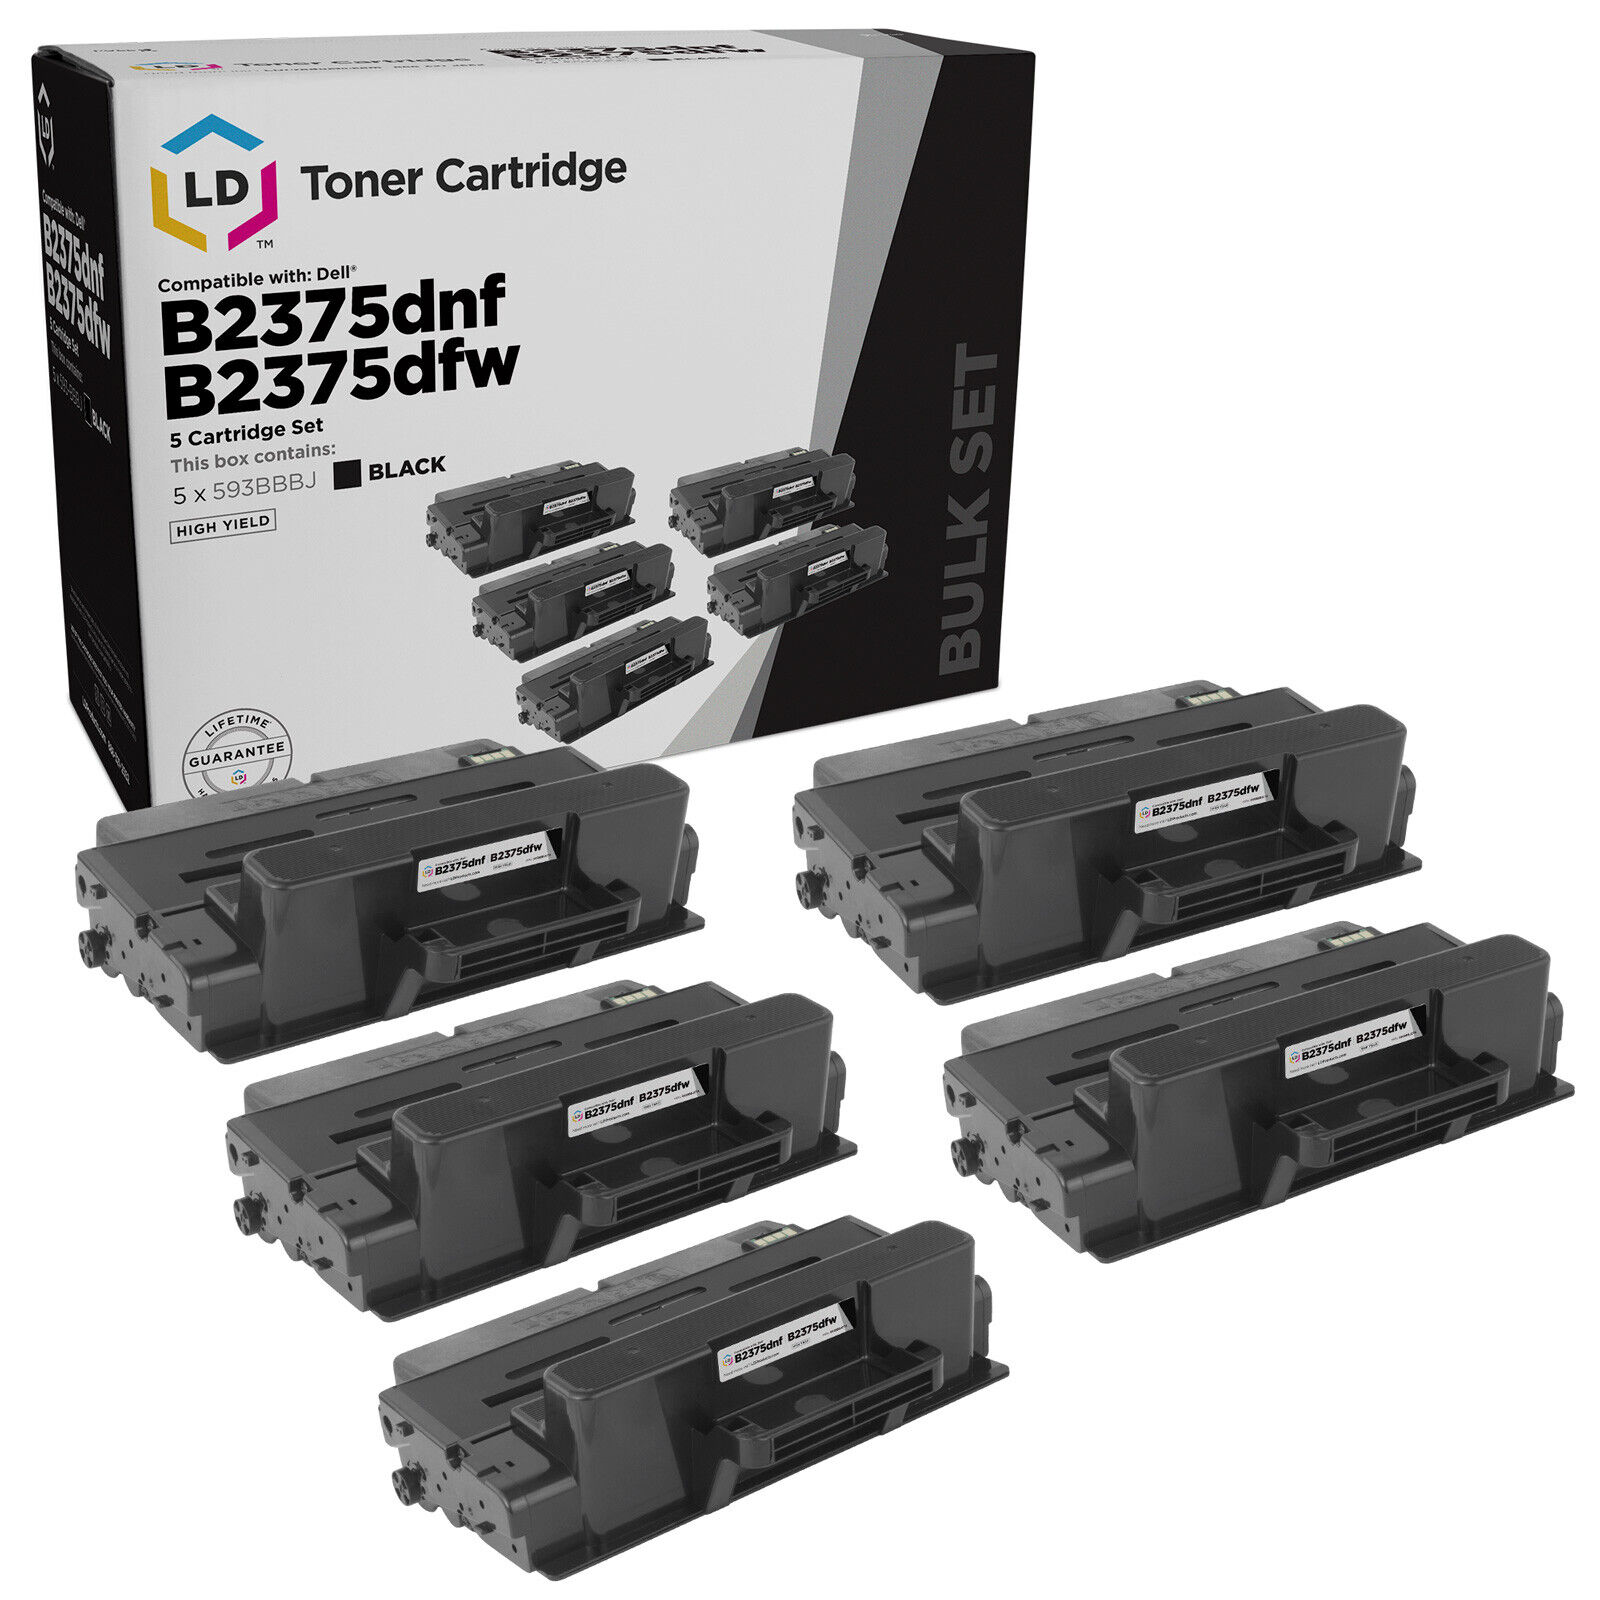 LD Compatible Dell 593-BBBJ 5PK Black Toner Cartridges for B2375dfw/B2375dnf